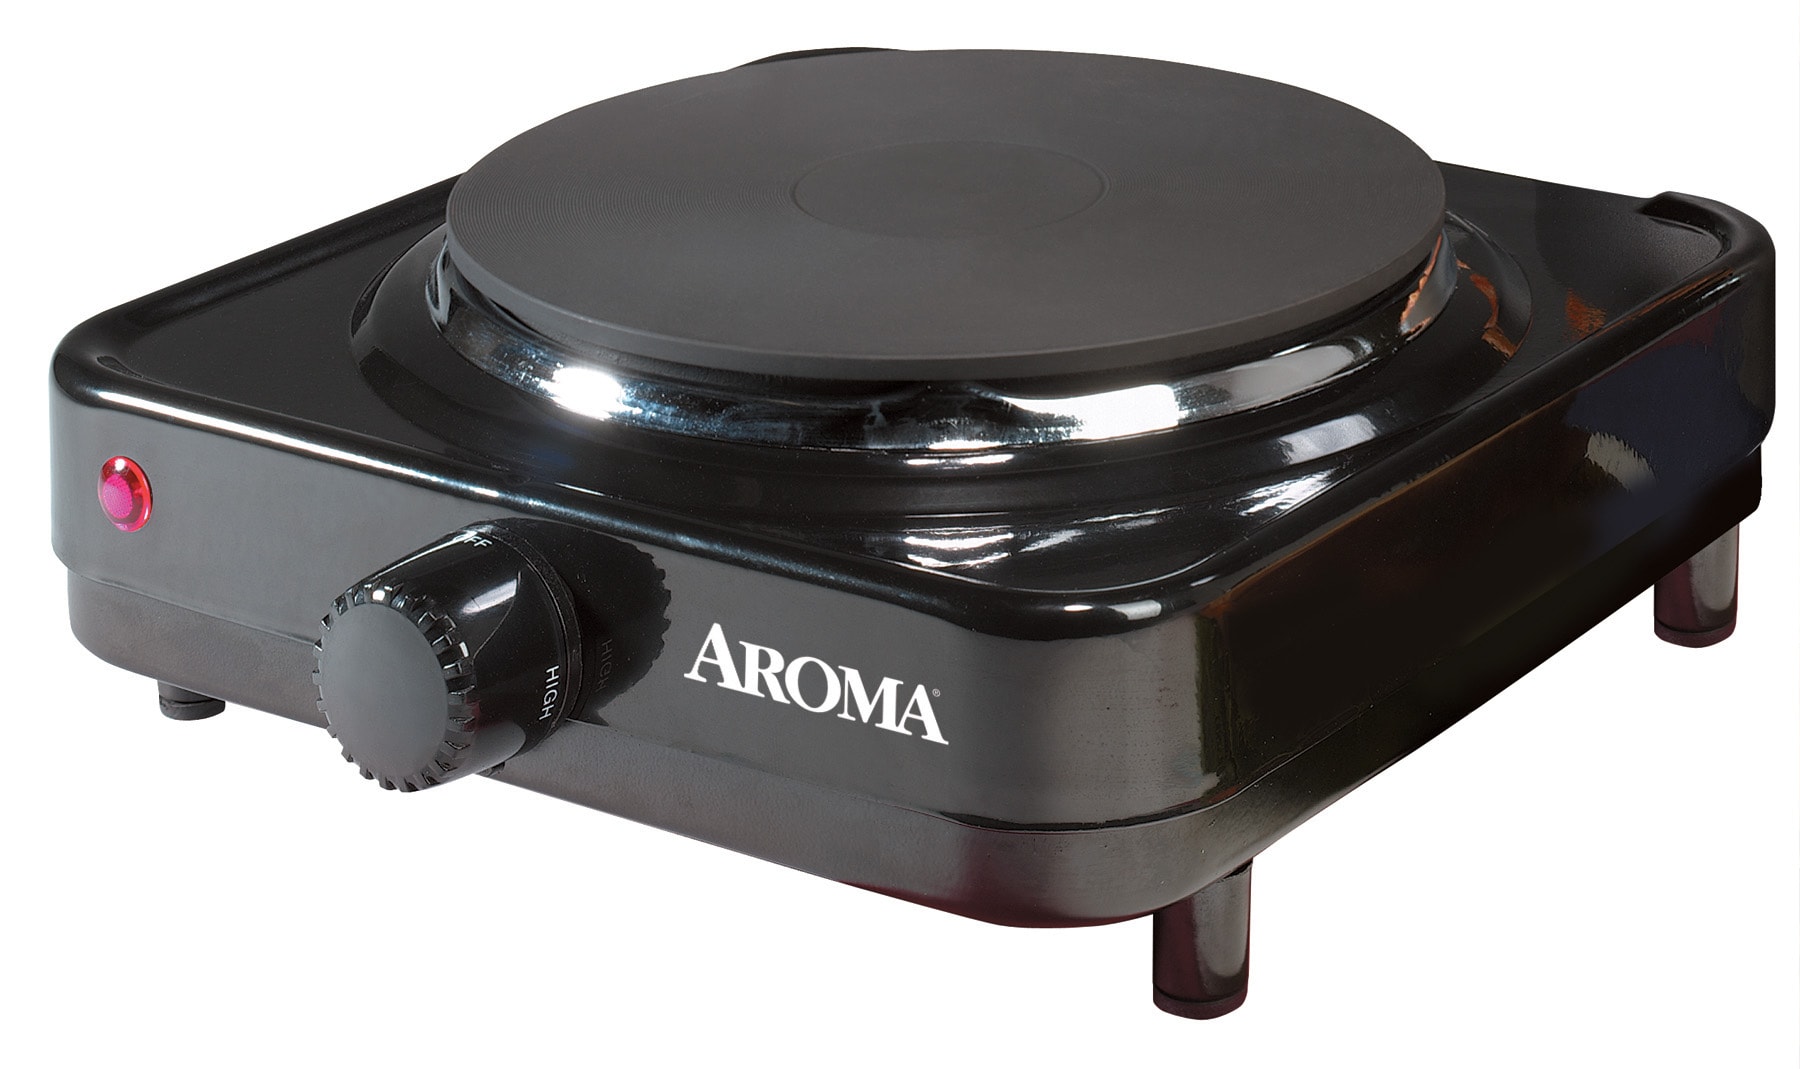 Aroma Single Burner Hot Plate